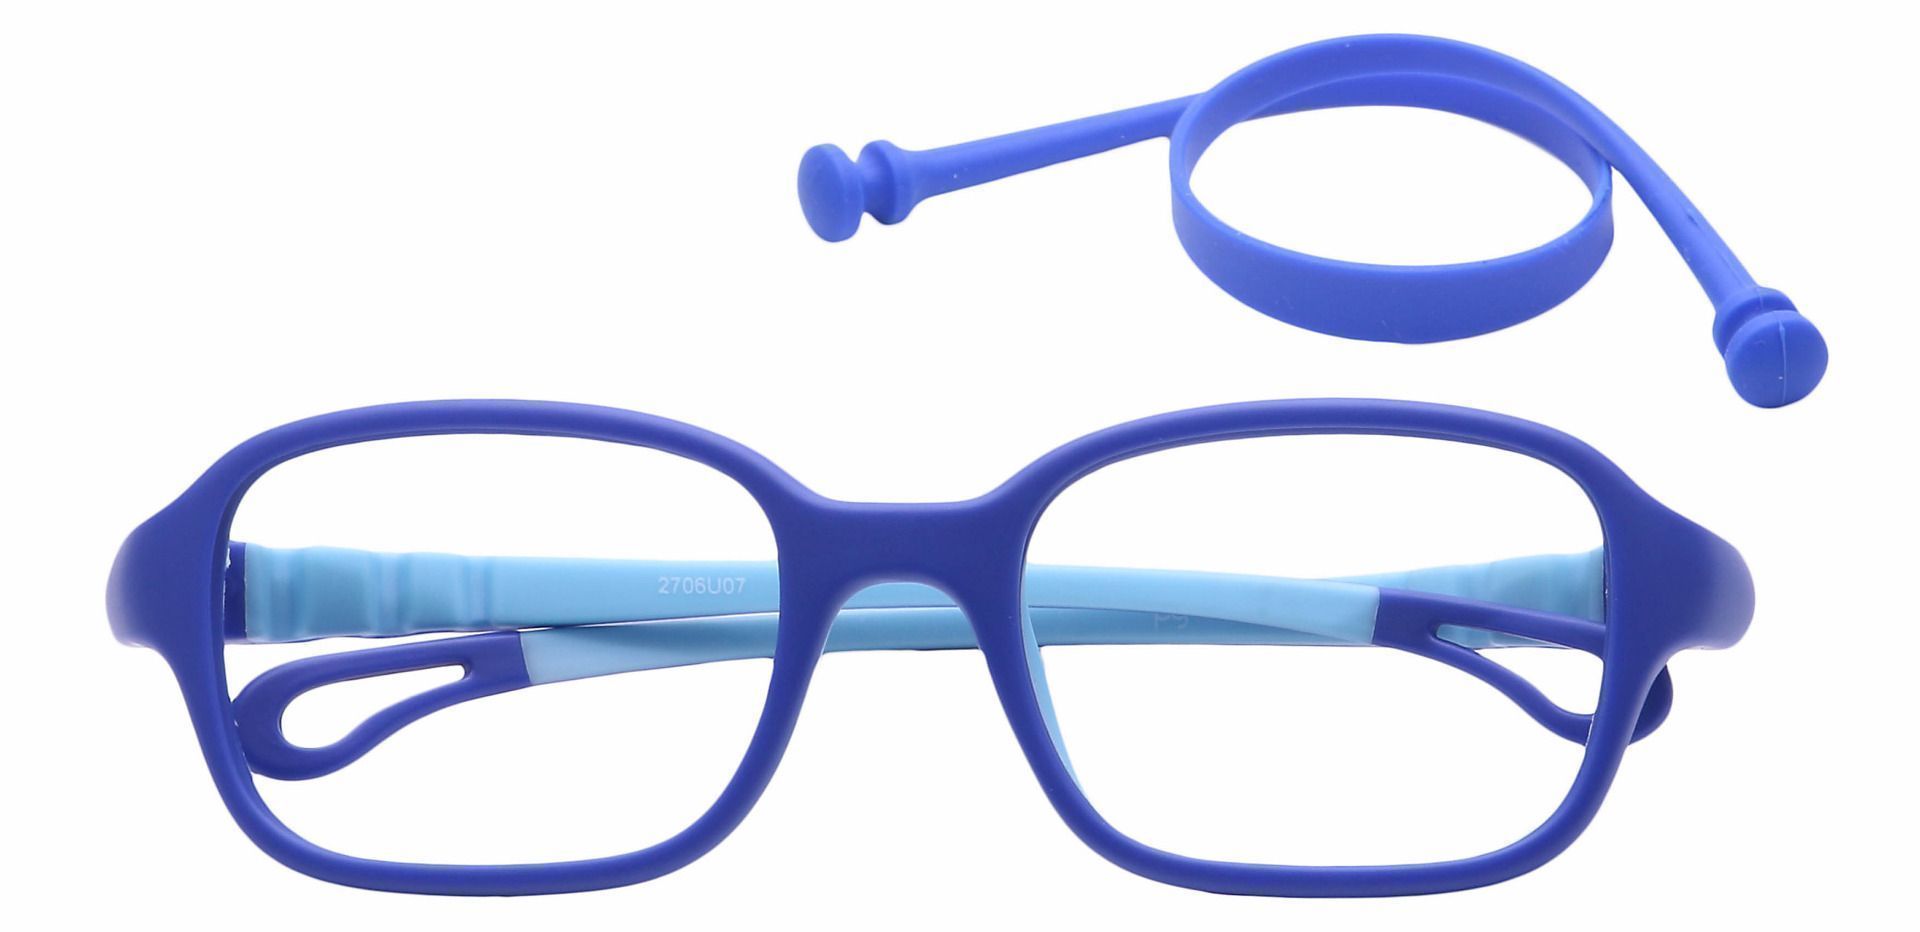 City Rectangle Eyeglasses Frame - Blue